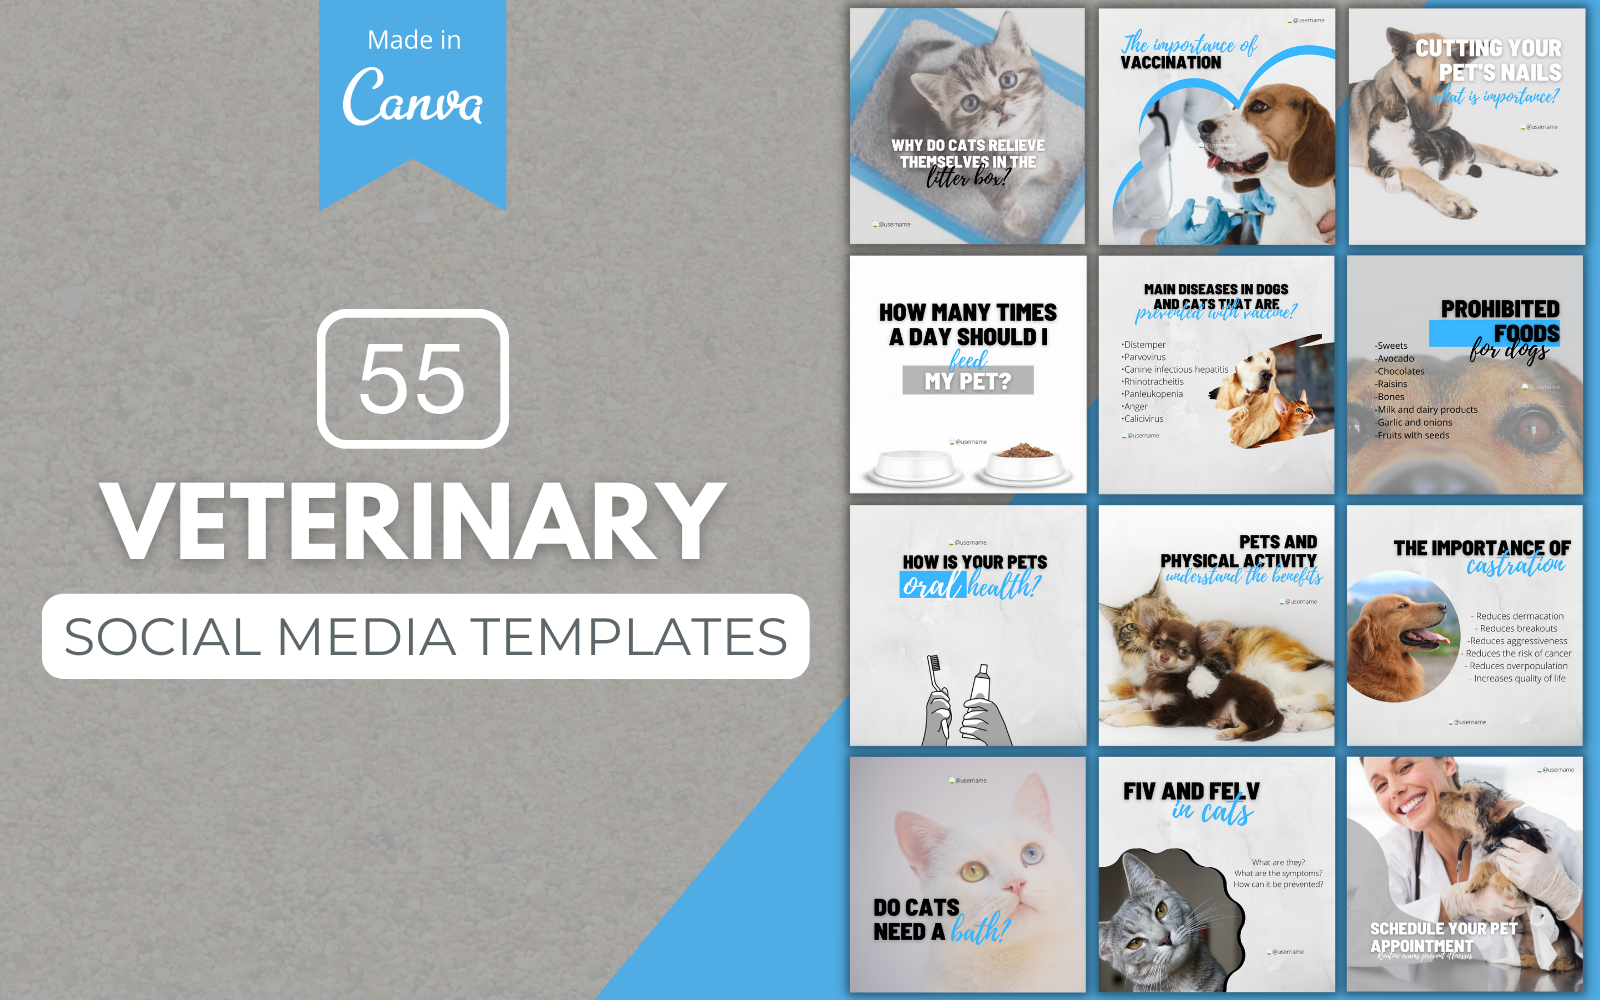 55 Veterinary Canva Templates For Social Media